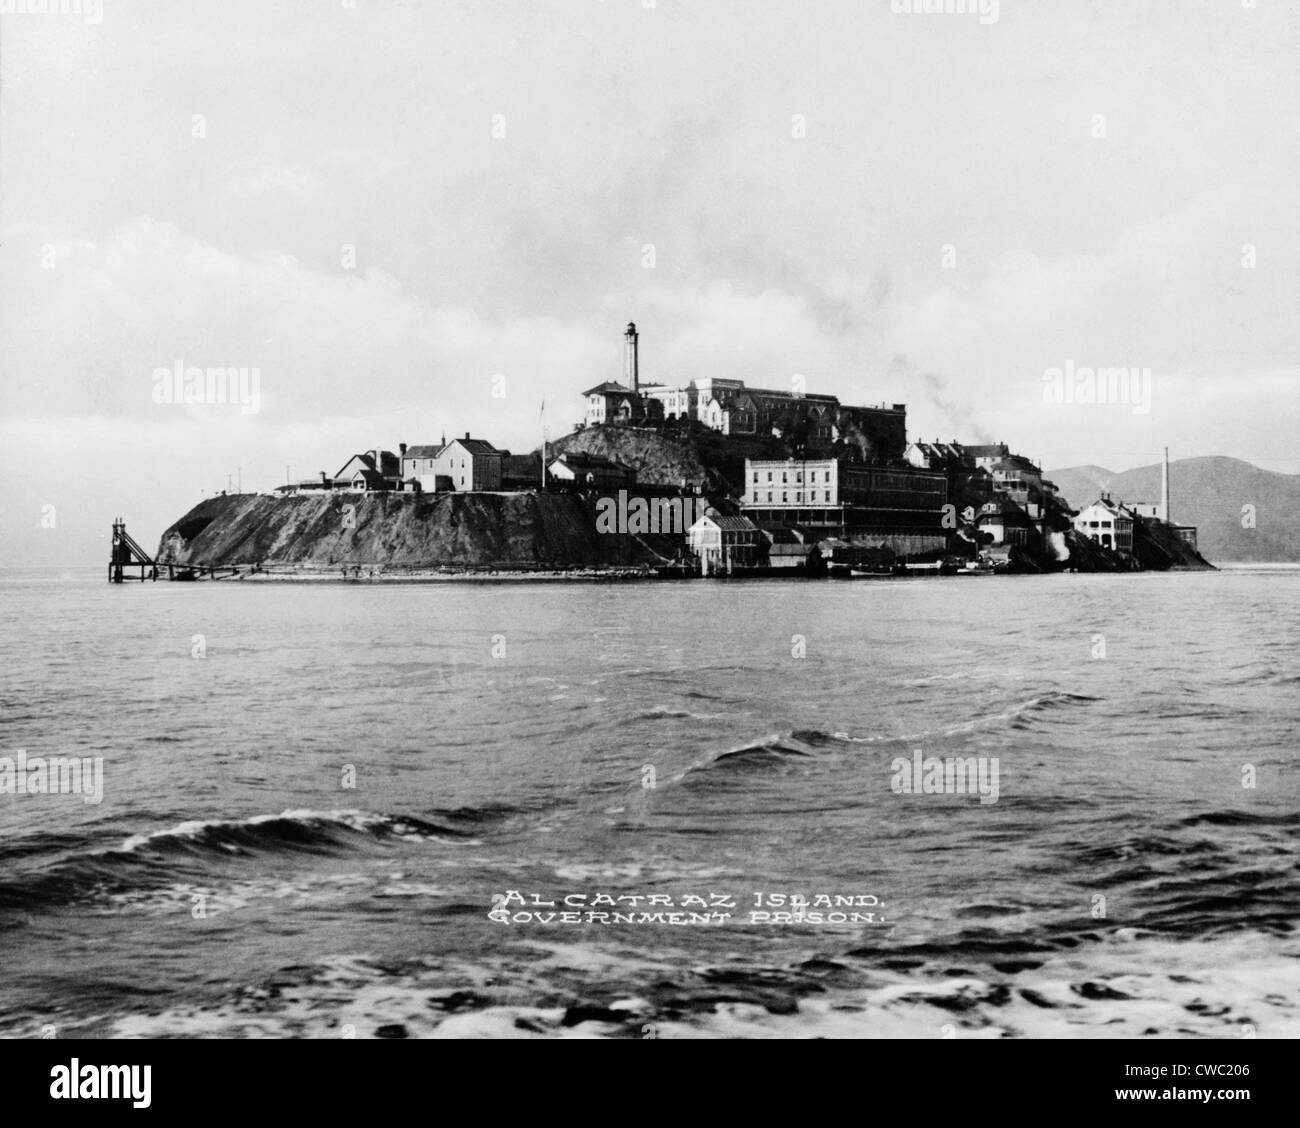 'The Rock' United States Penitentiary on Alcatraz Island in San Francisco Bay California. Ca. 1940s. Stock Photo